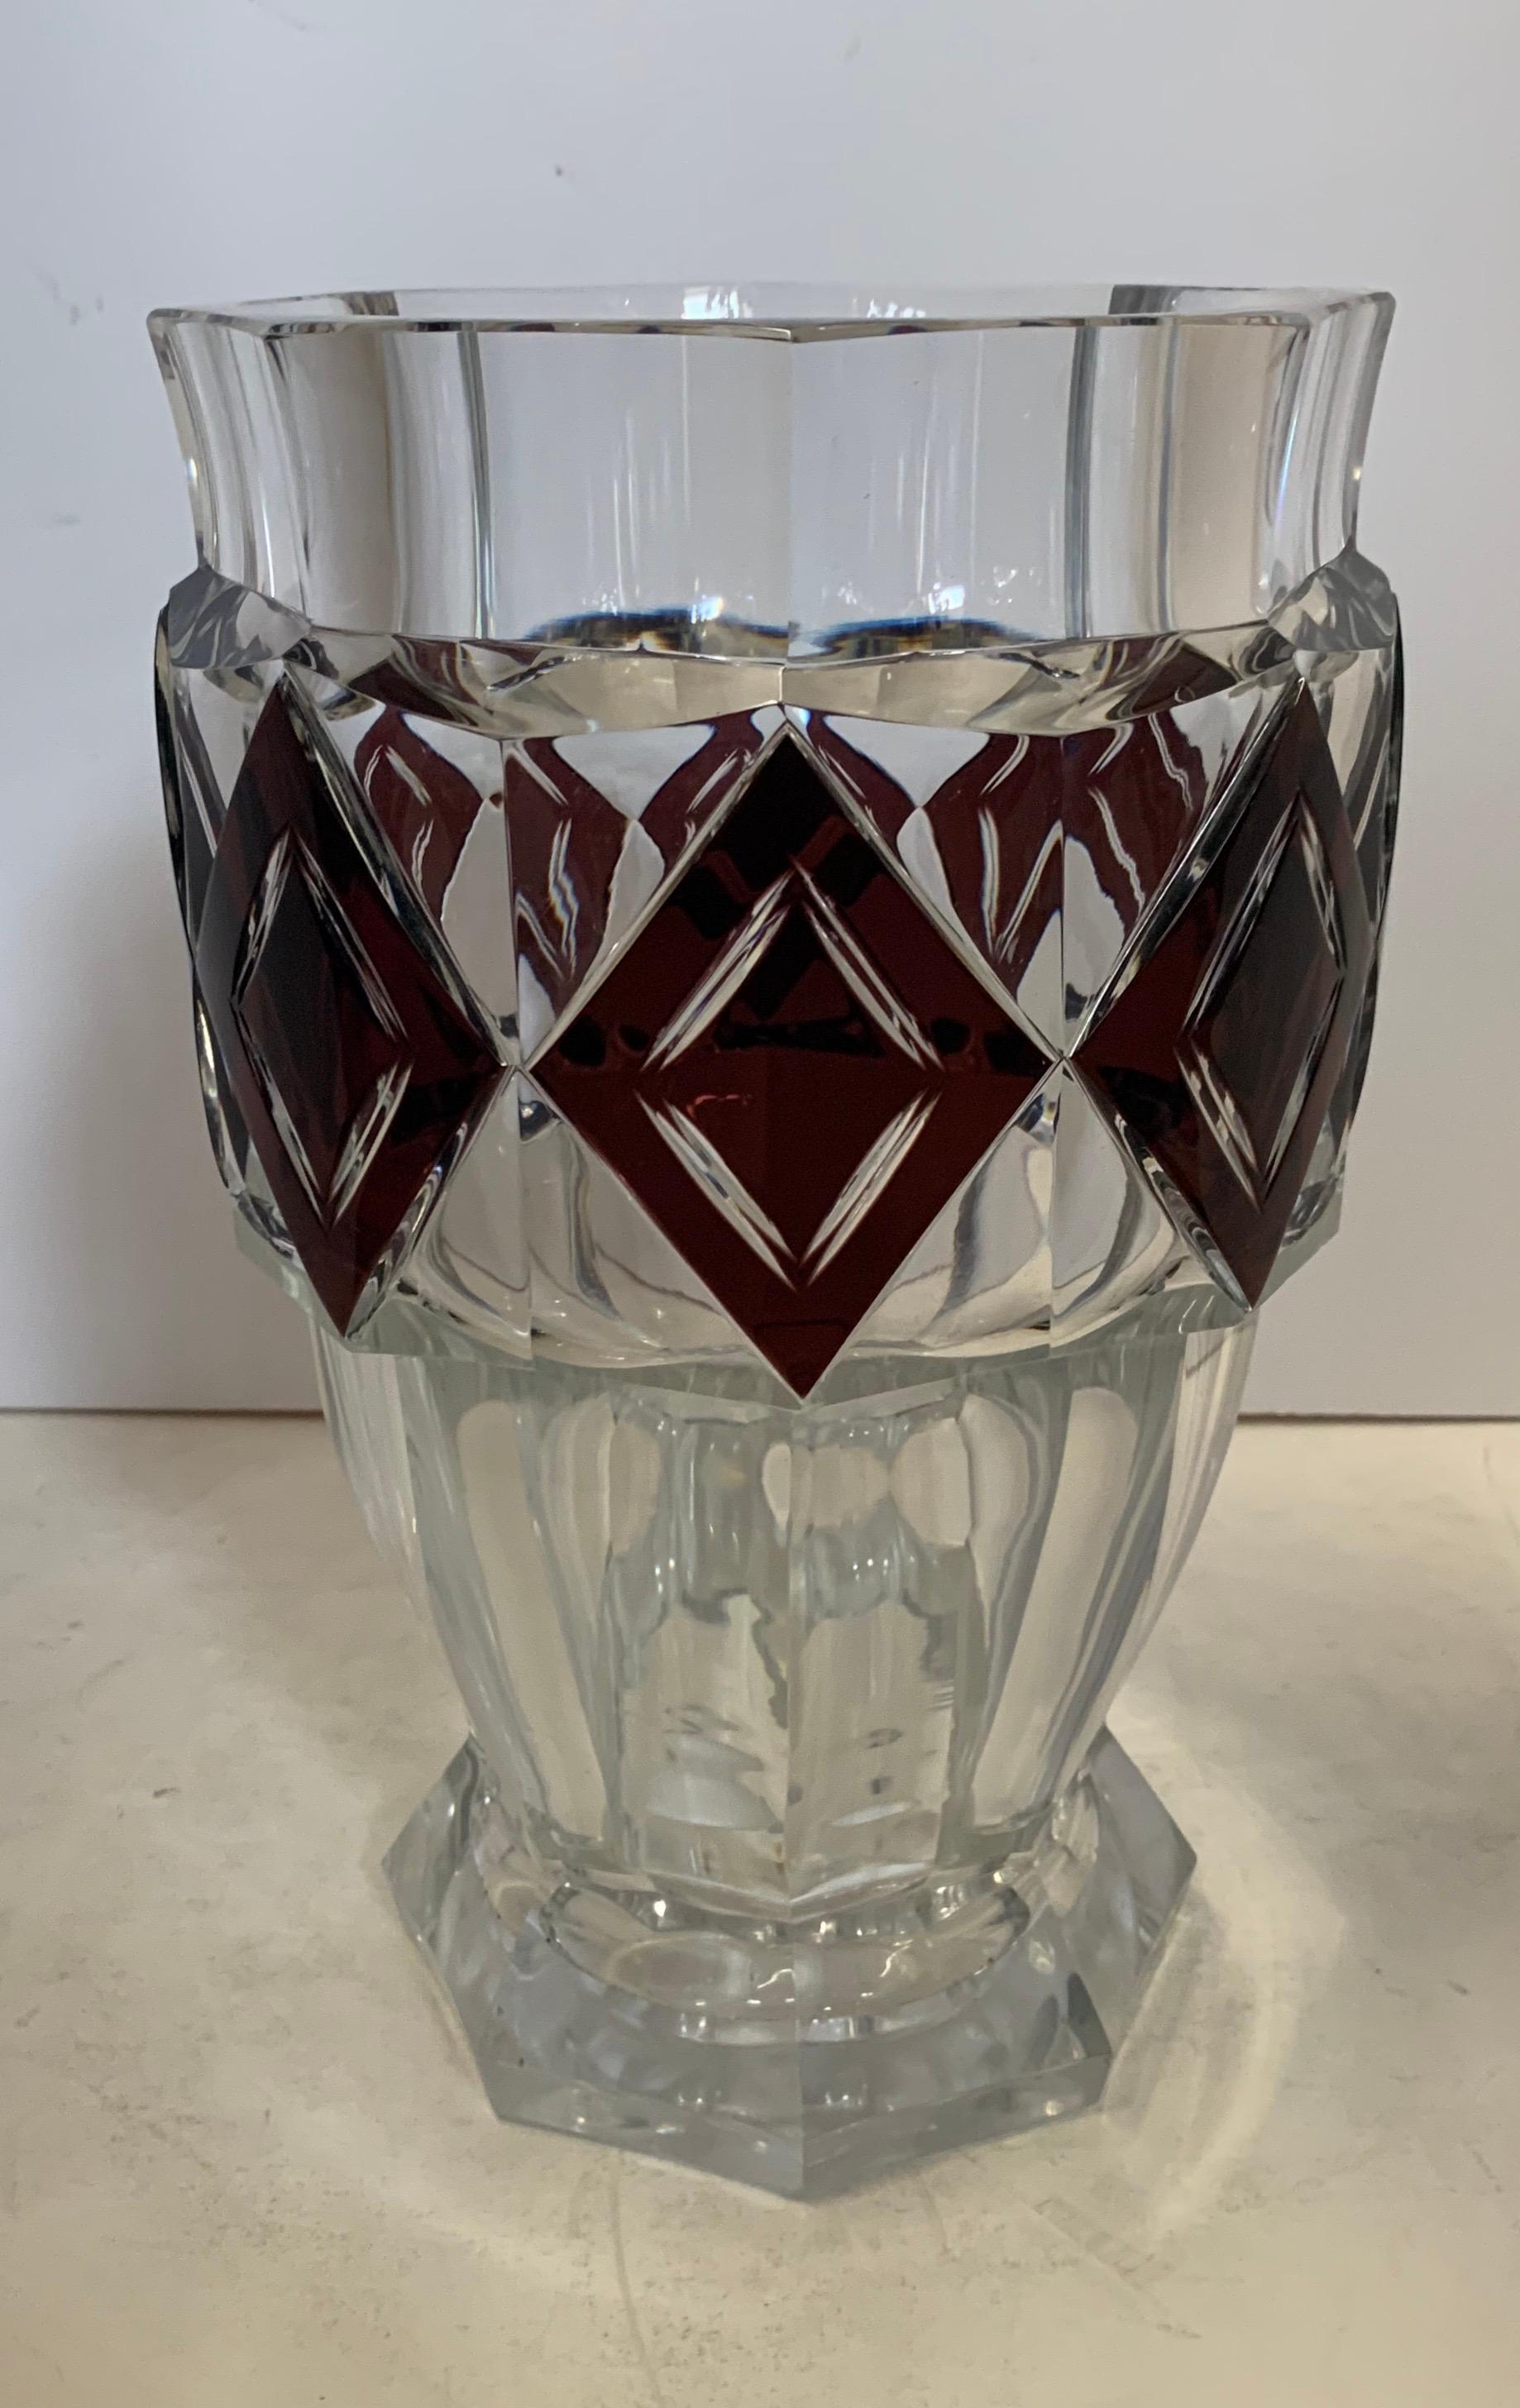 Eine wunderbare Val Saint Lambert Amethyst Diamant-Overlay Kunst Glas / Kristall Kipling große Vase unsigned.
Maße: 11 1/2